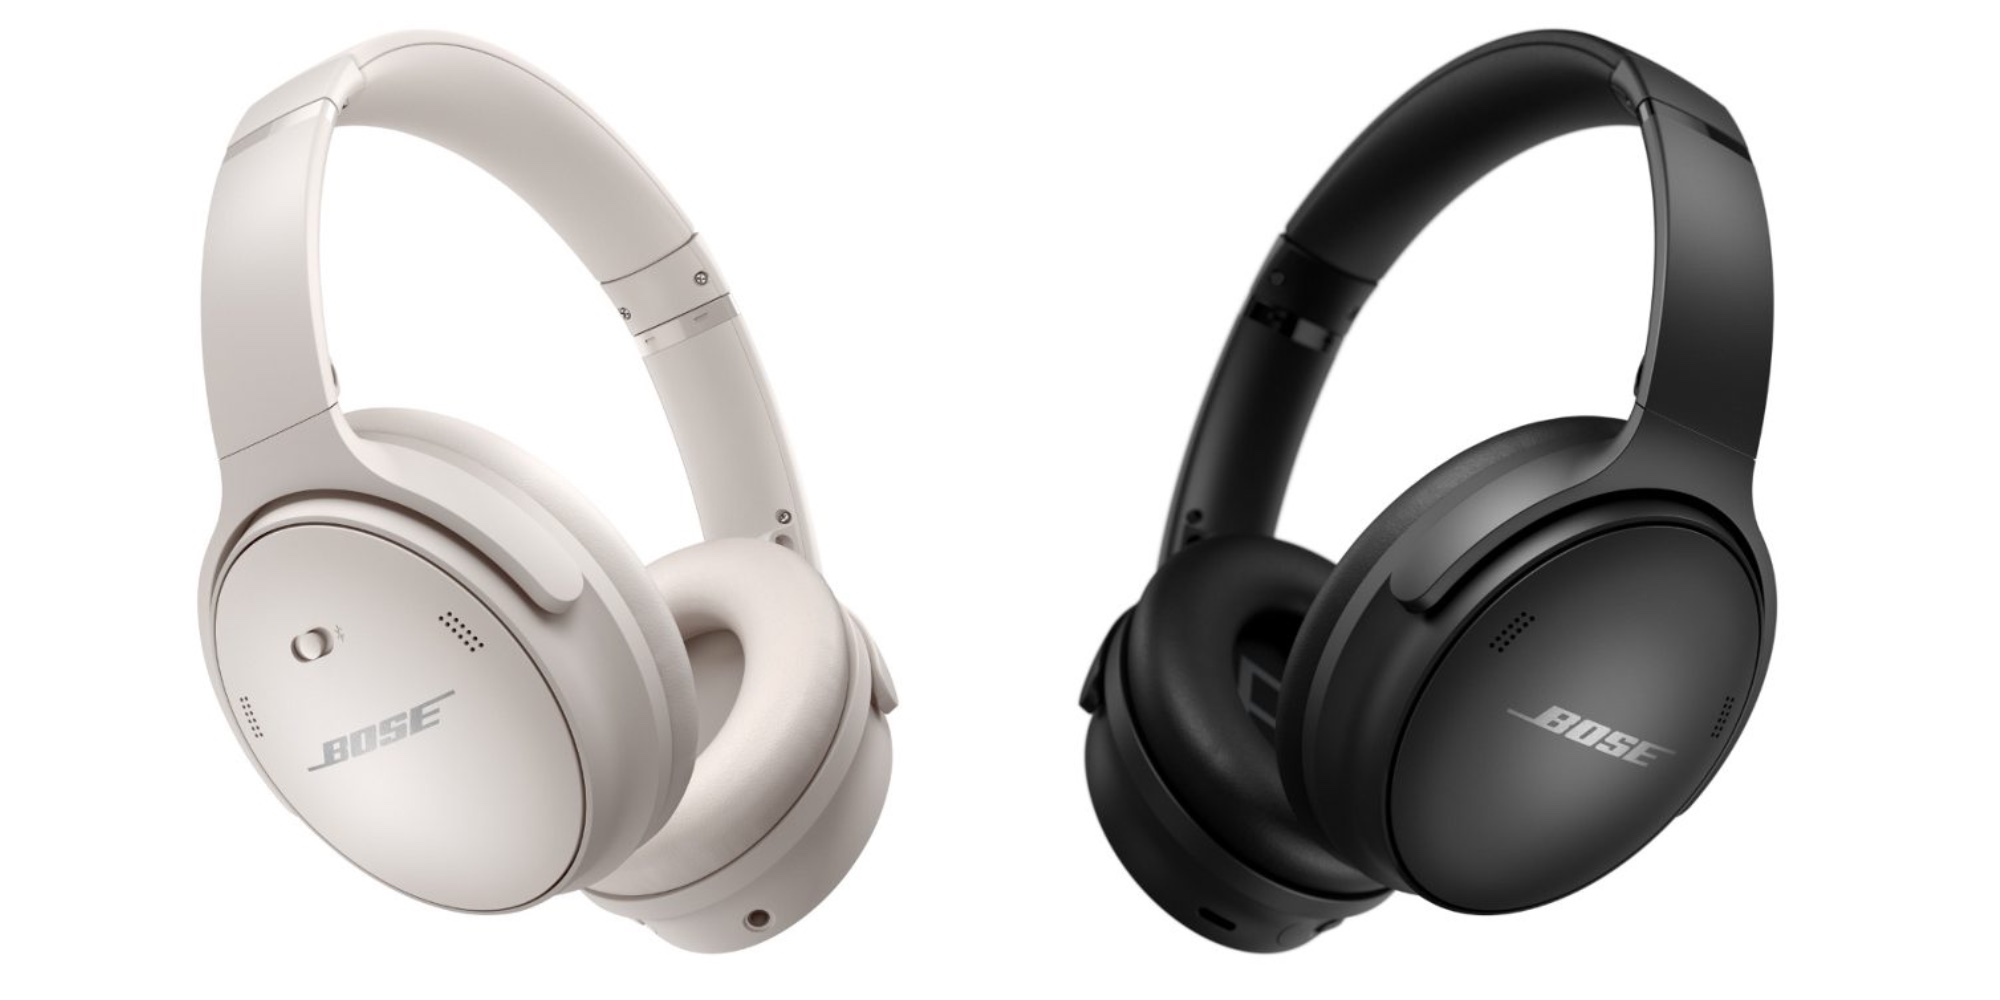 Bose QuietComfort ANC Headphones see Black discount $279 (Save $50)